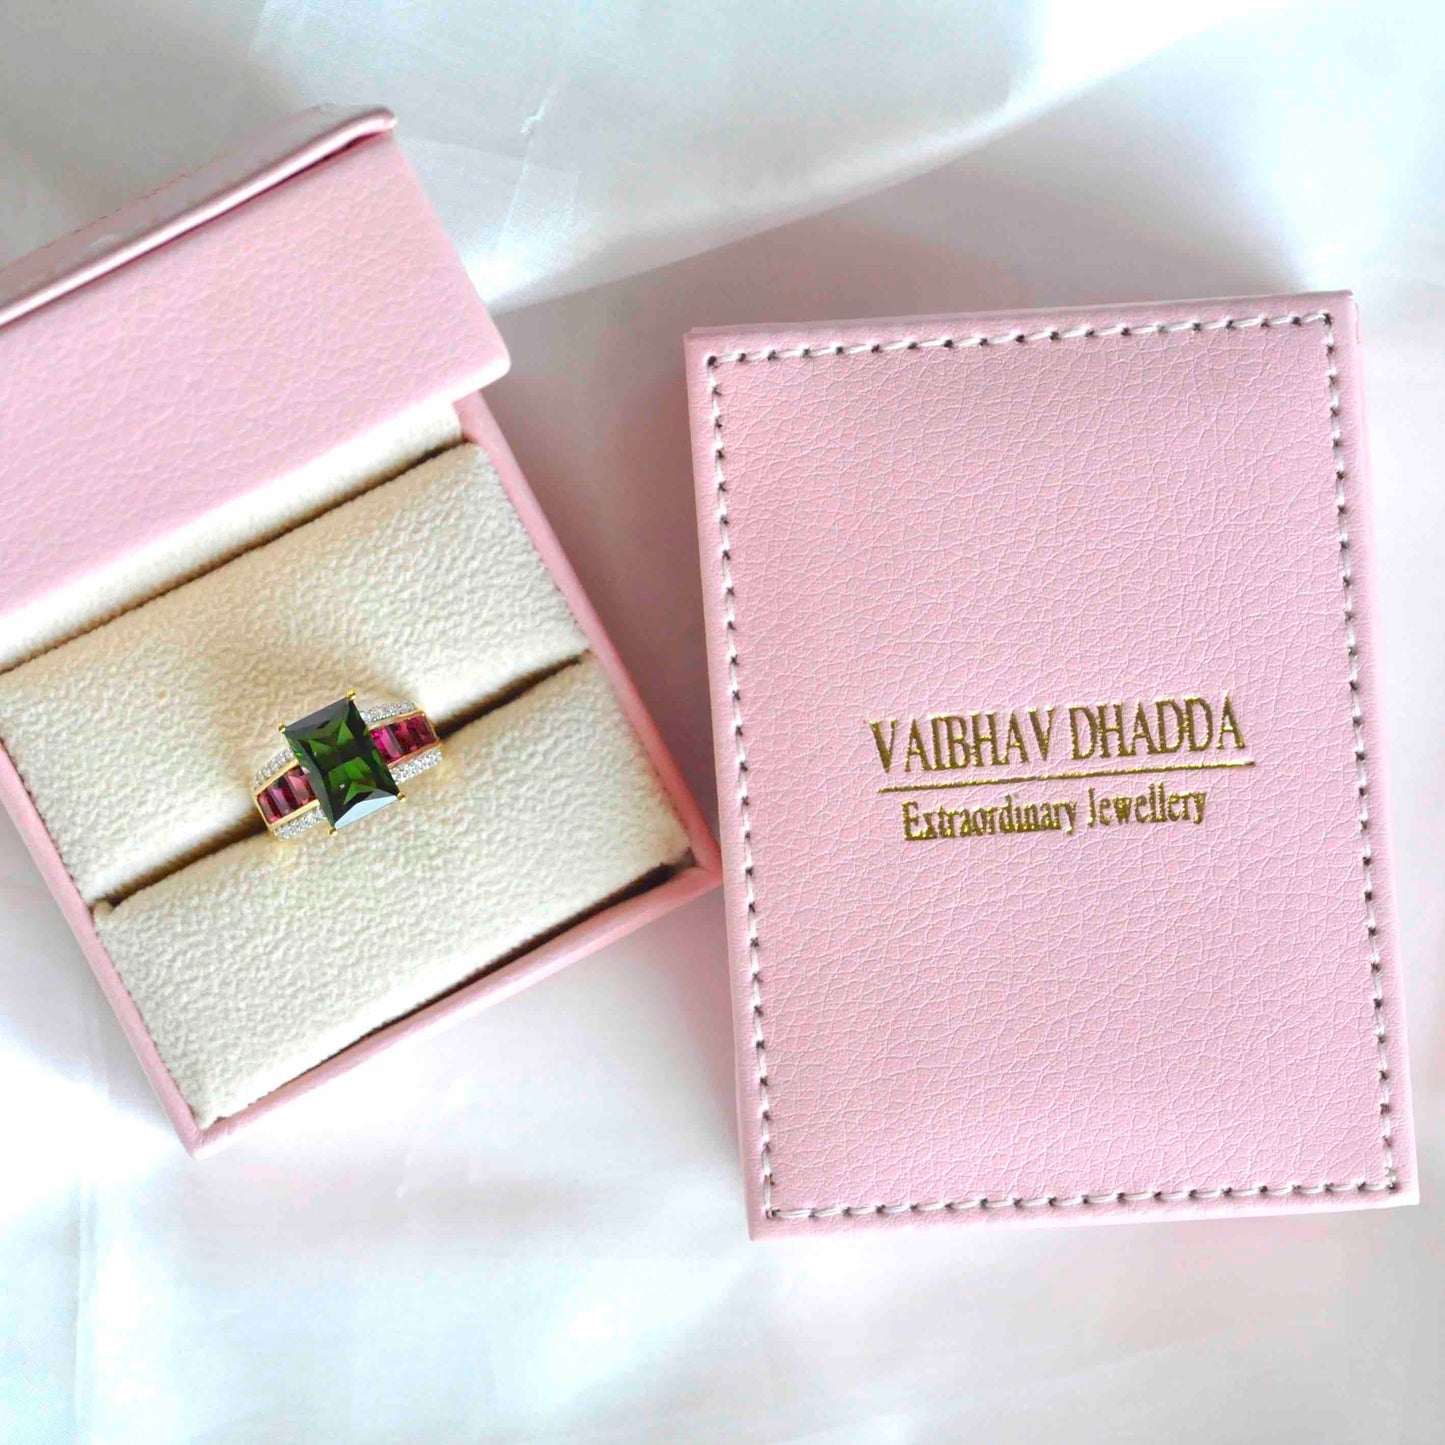 18K Gold Green & Pink Tourmaline Baguette Diamond Ring - Vaibhav Dhadda Jewelry